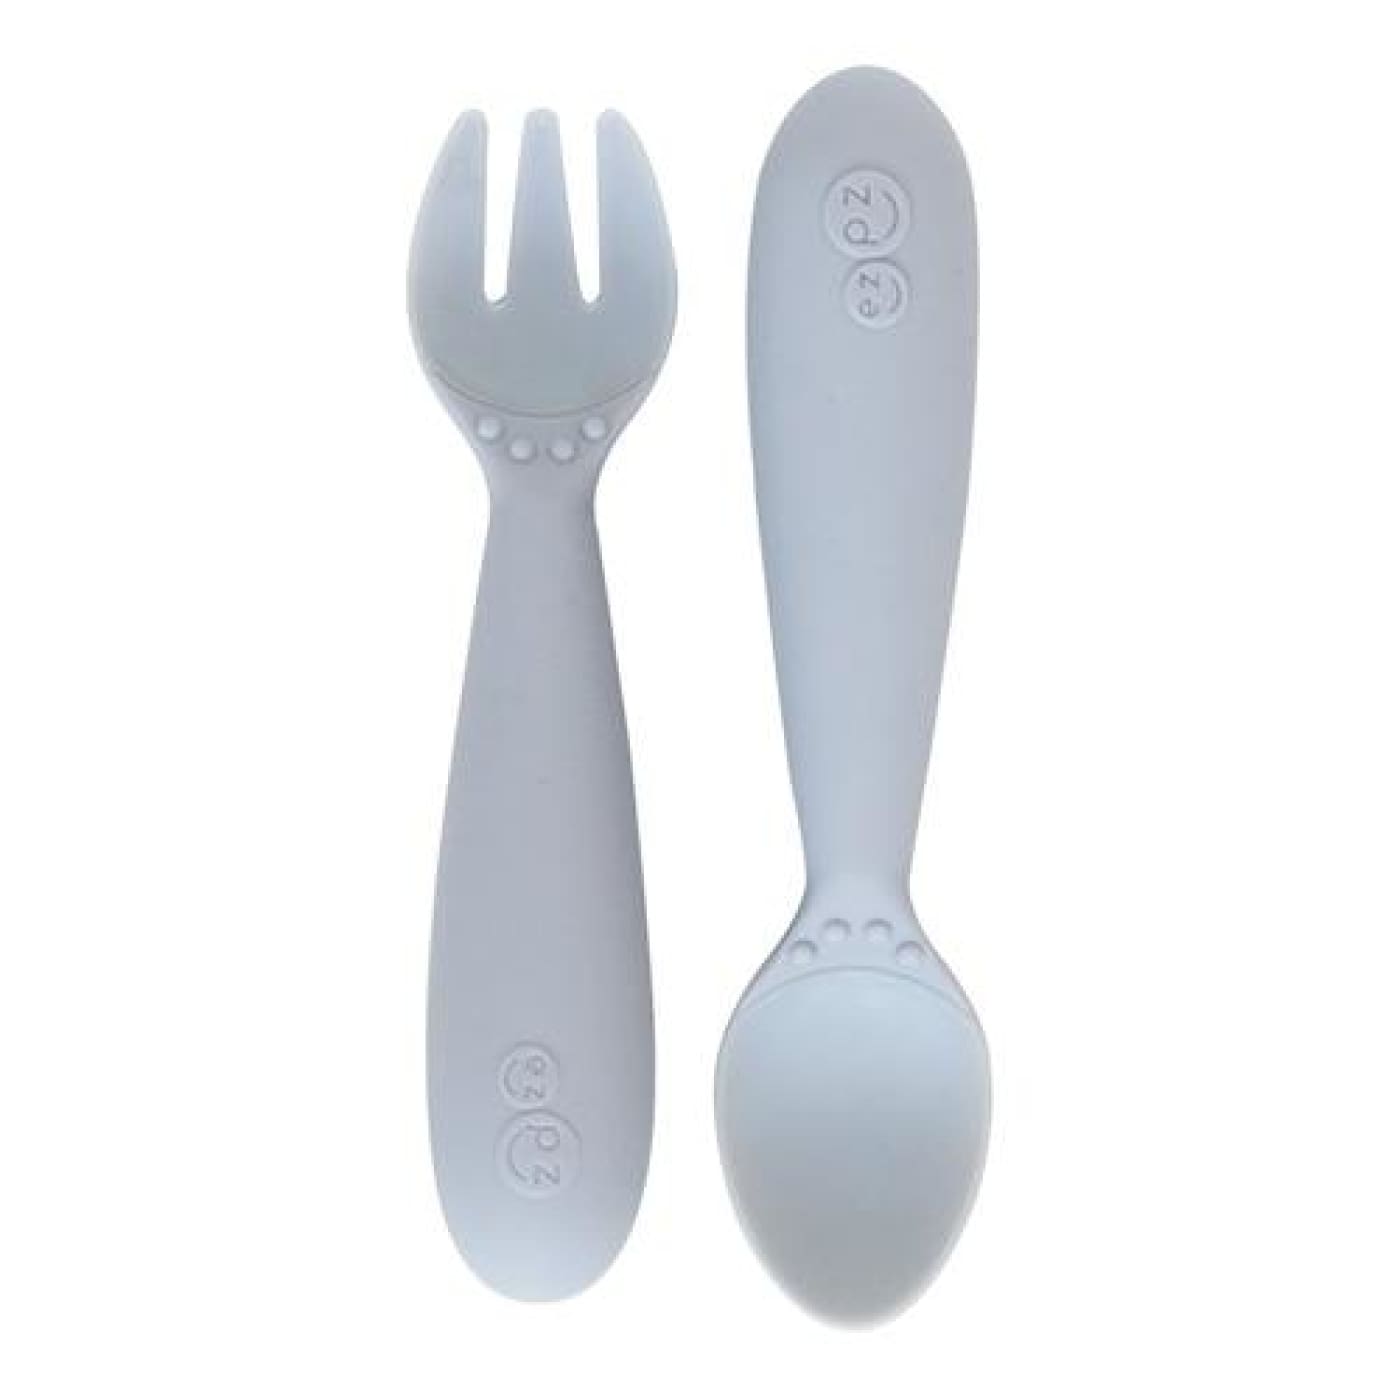 https://cdn.shopify.com/s/files/1/0070/3535/5193/products/ezpz-mini-utensils-pewter-nursing-feeding-cutleryplatesbowlstoys-bubmania-cutlery-spoon-tableware-552_1600x.jpg?v=1589855908